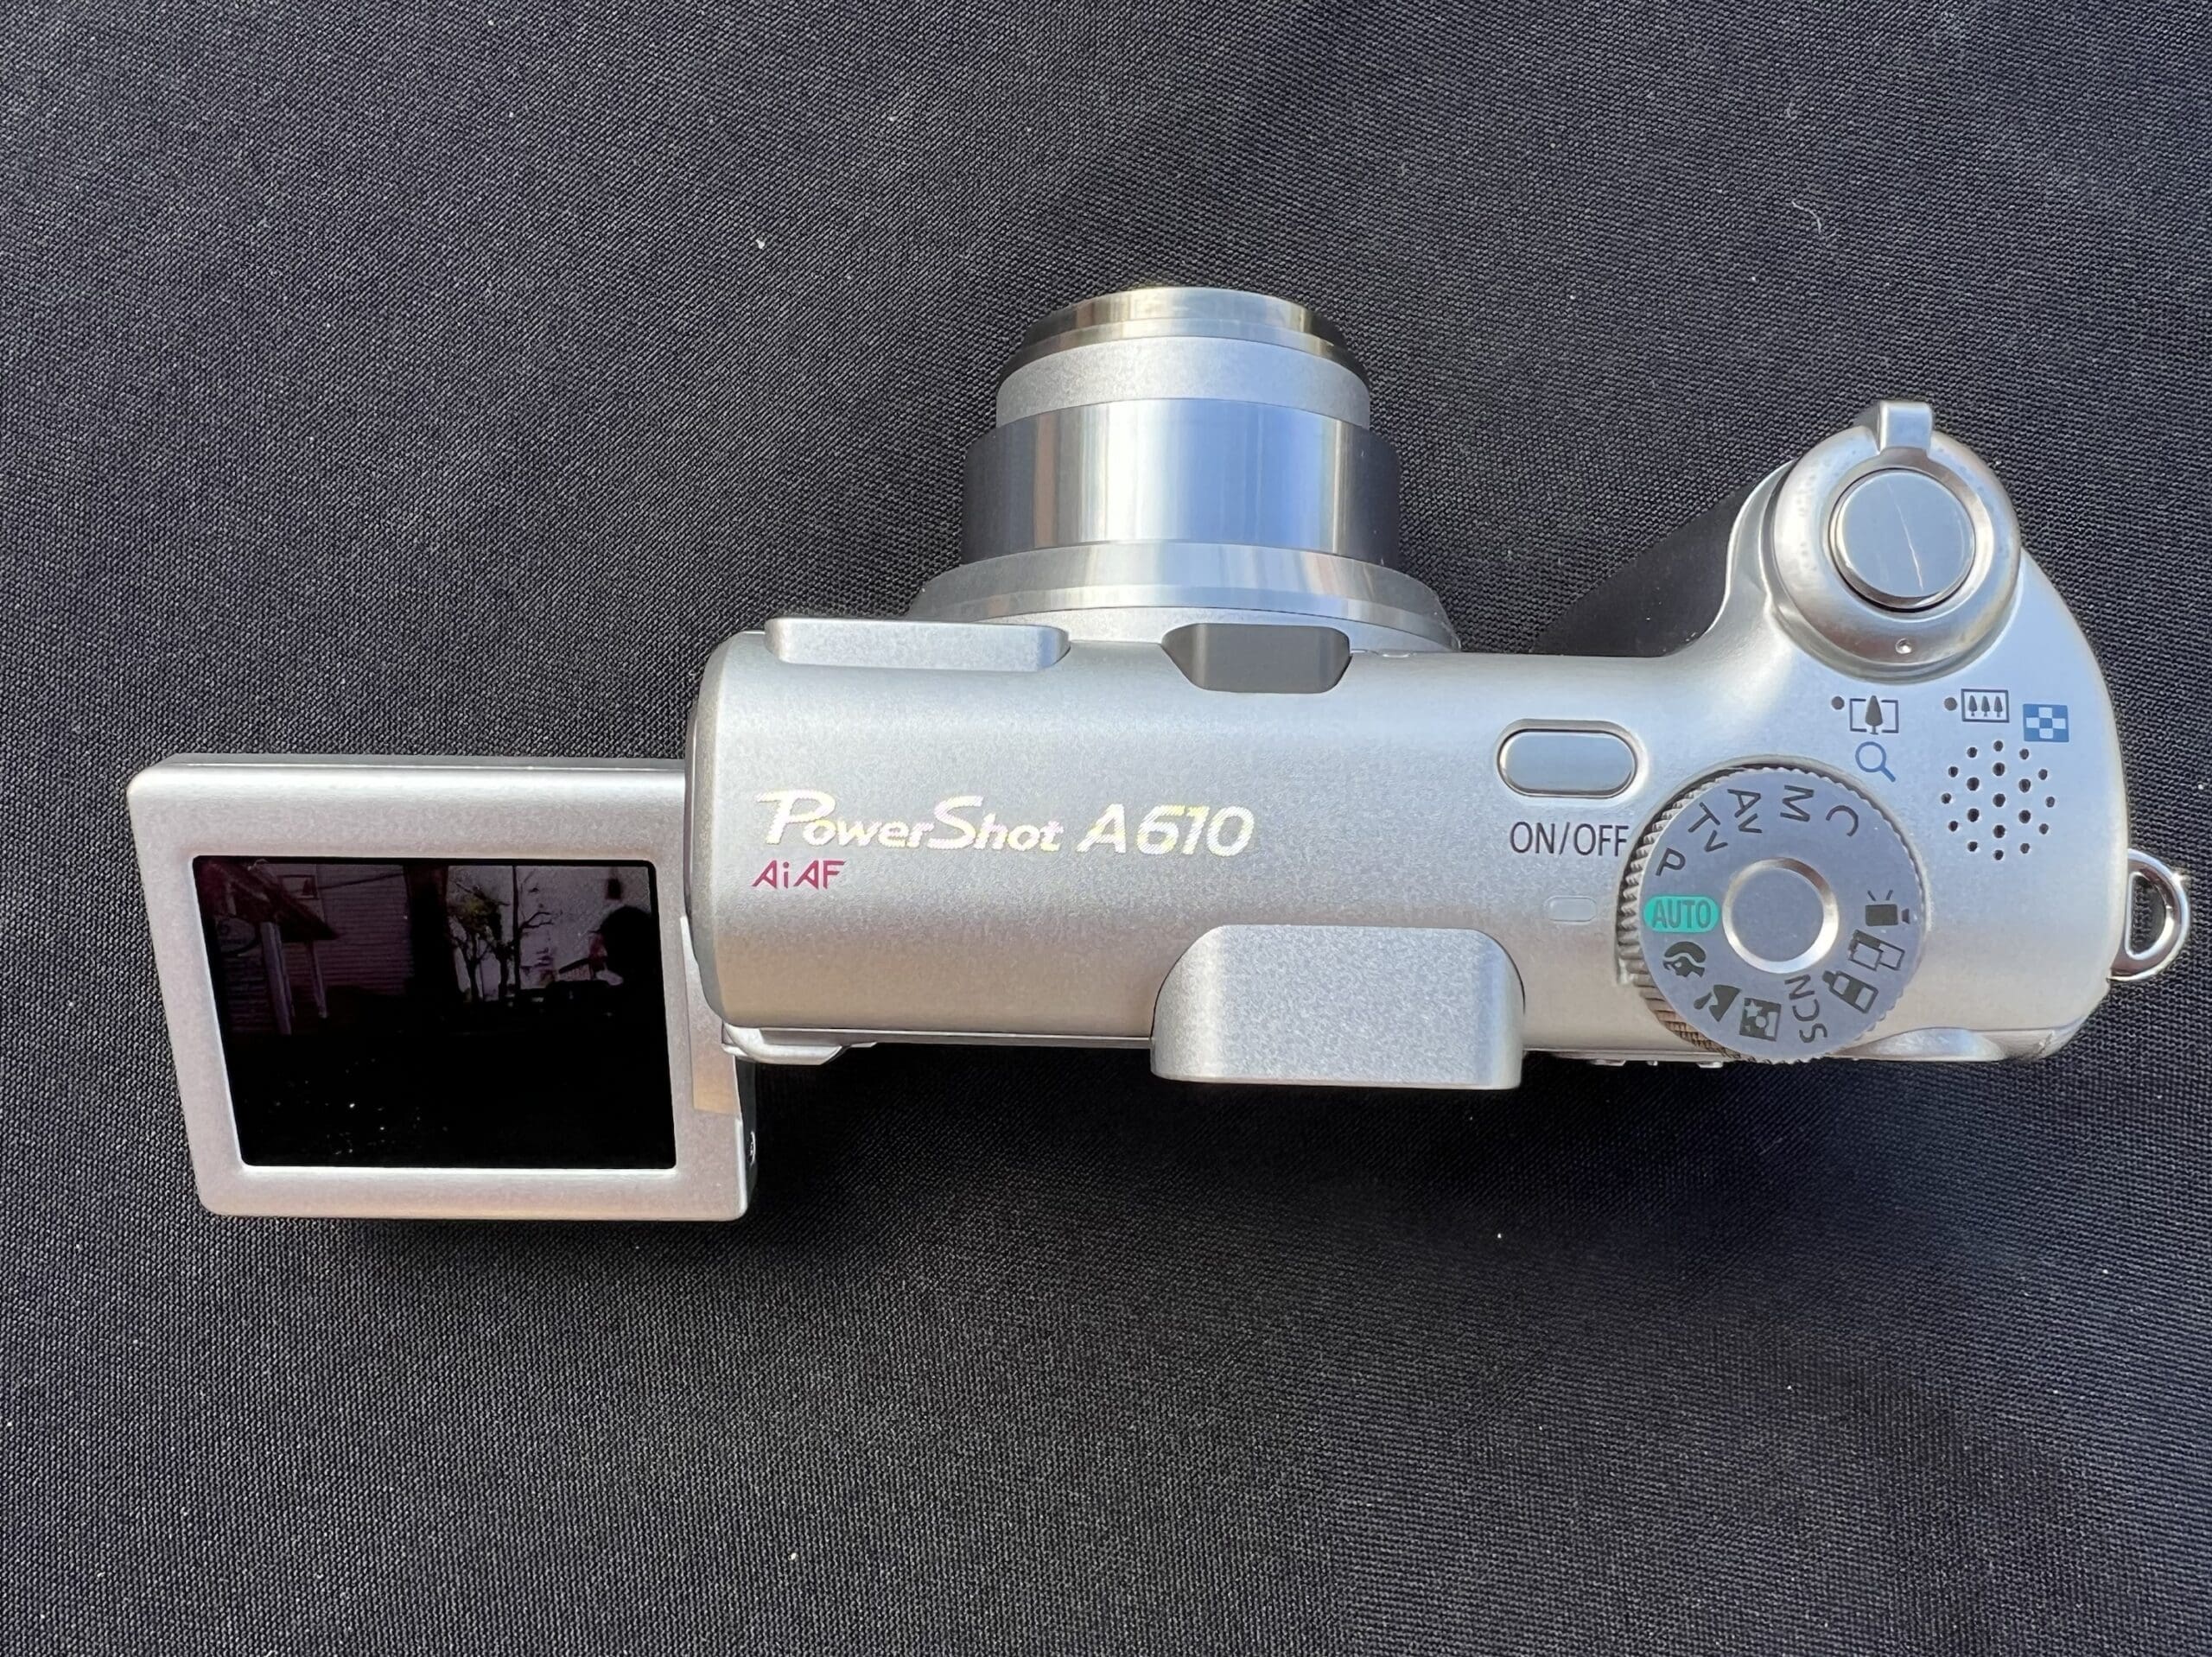 Celsius Aan het liegen Diakritisch Canon Power Shot A610 Ai AF (Digital Point & Shoot) - Black Lab Imaging